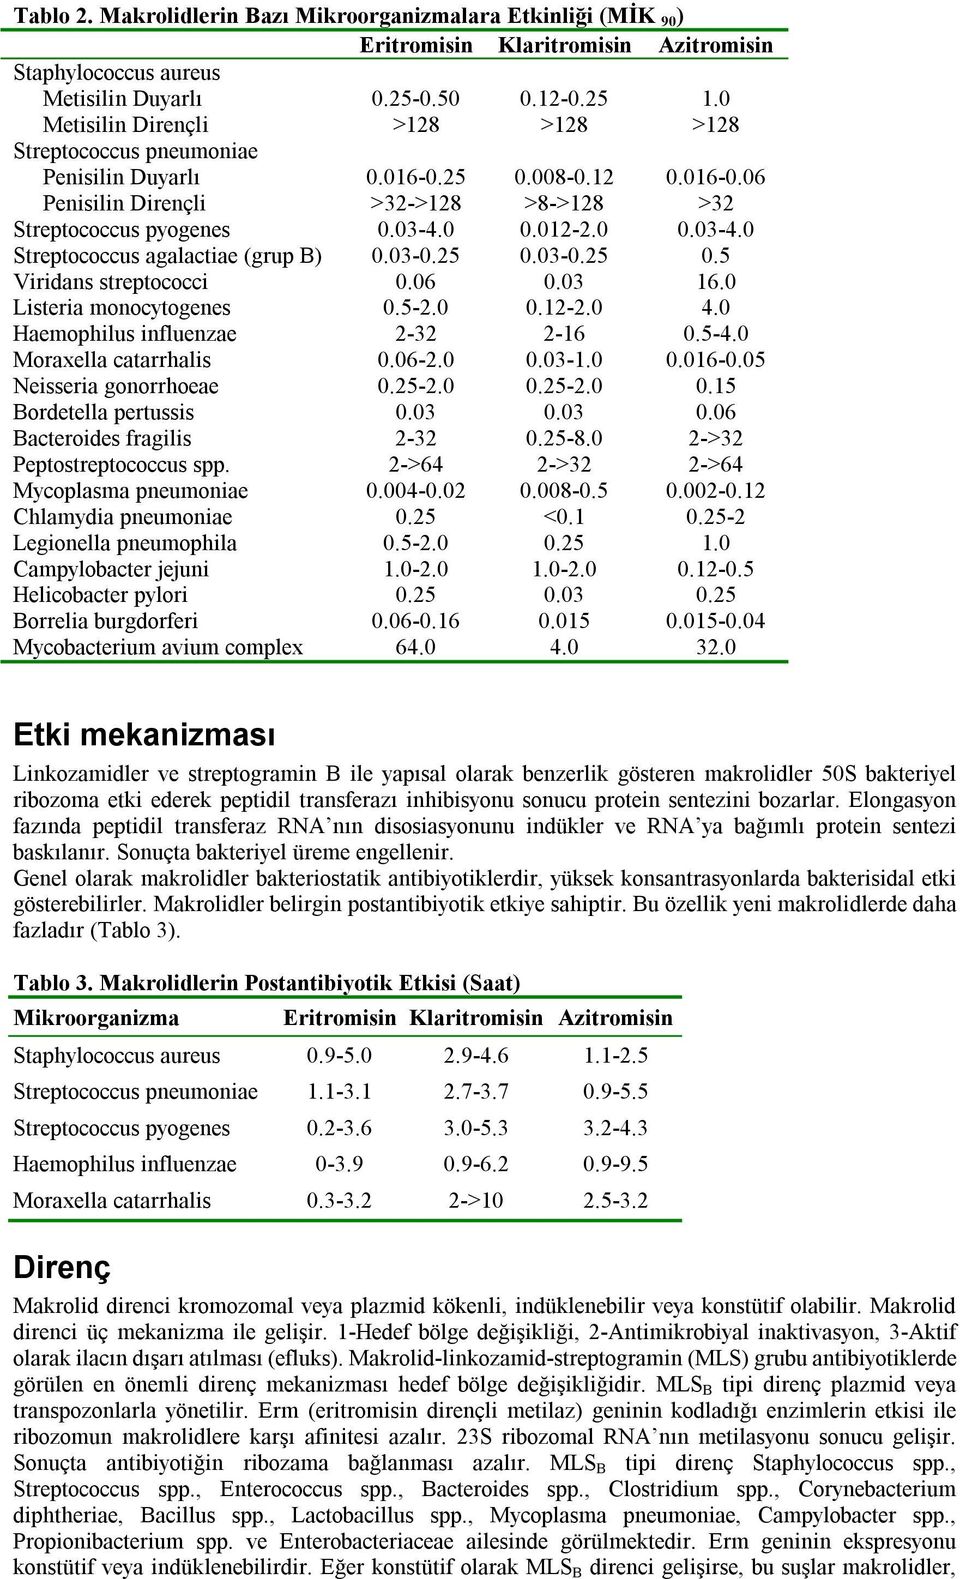 0 0.012-2.0 0.03-4.0 Streptococcus agalactiae (grup B) 0.03-0.25 0.03-0.25 0.5 Viridans streptococci 0.06 0.03 16.0 Listeria monocytogenes 0.5-2.0 0.12-2.0 4.0 Haemophilus influenzae 2-32 2-16 0.5-4.